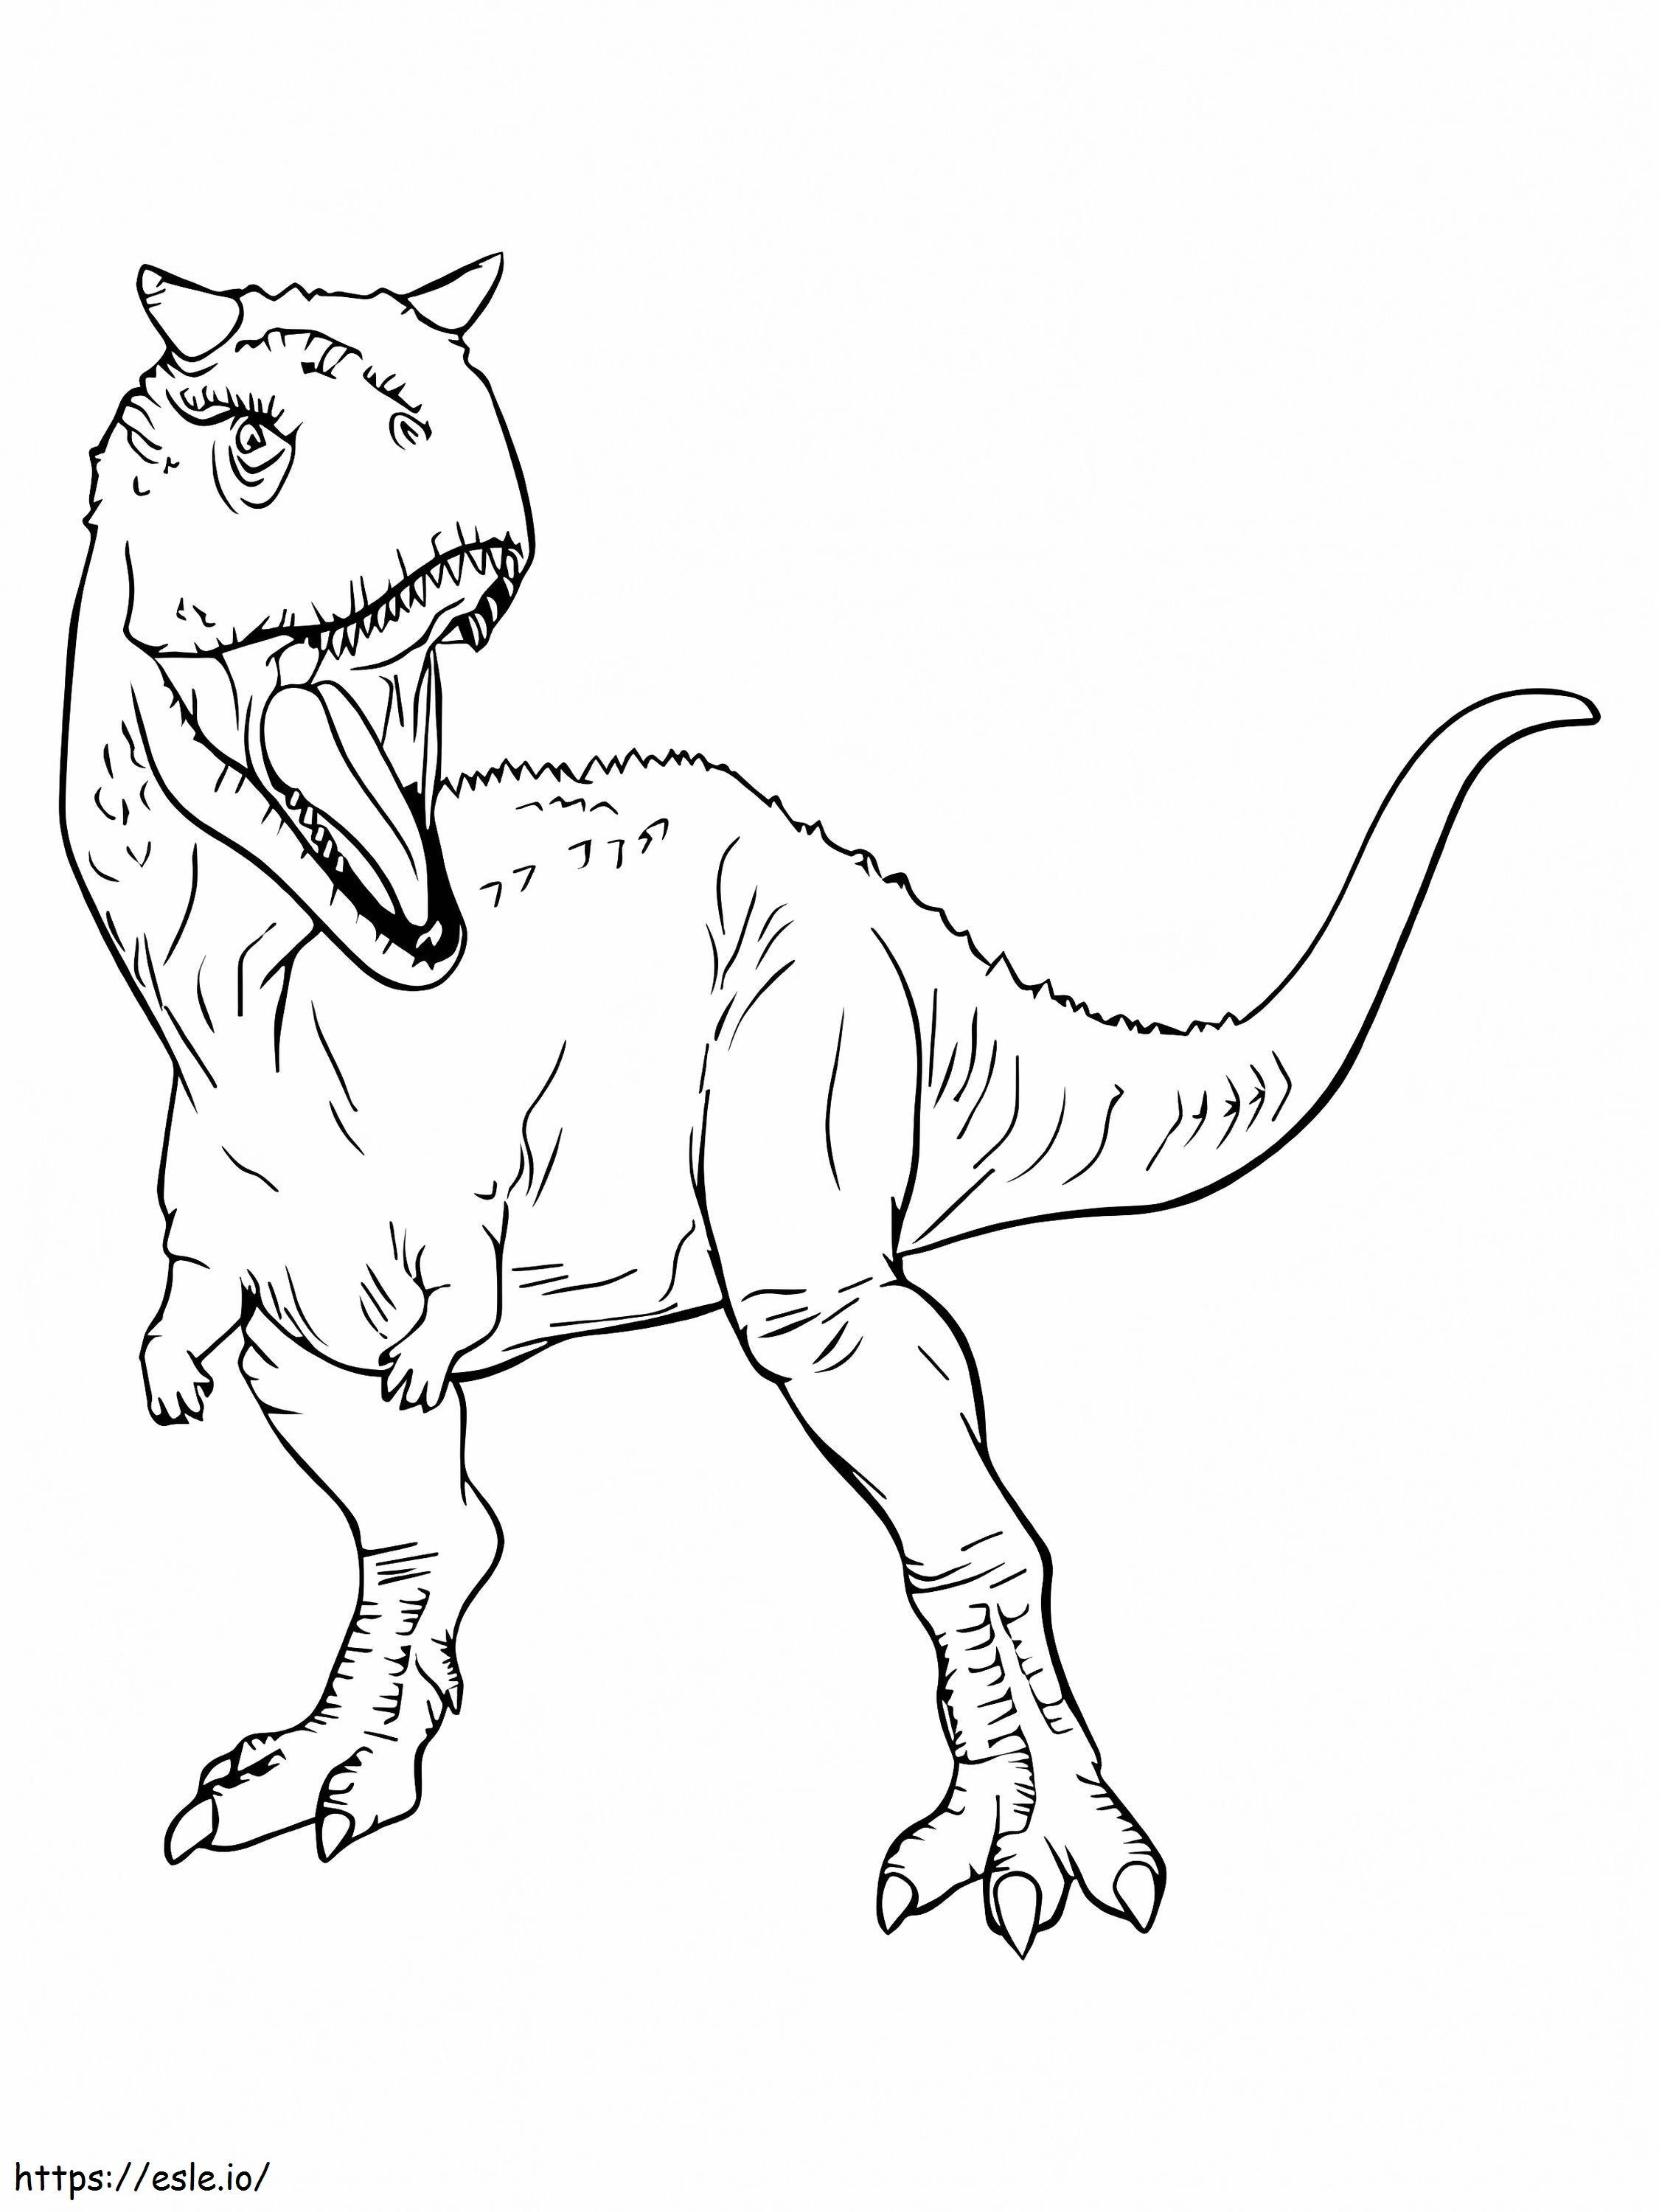 Jurassic Park Carnotaurus coloring page